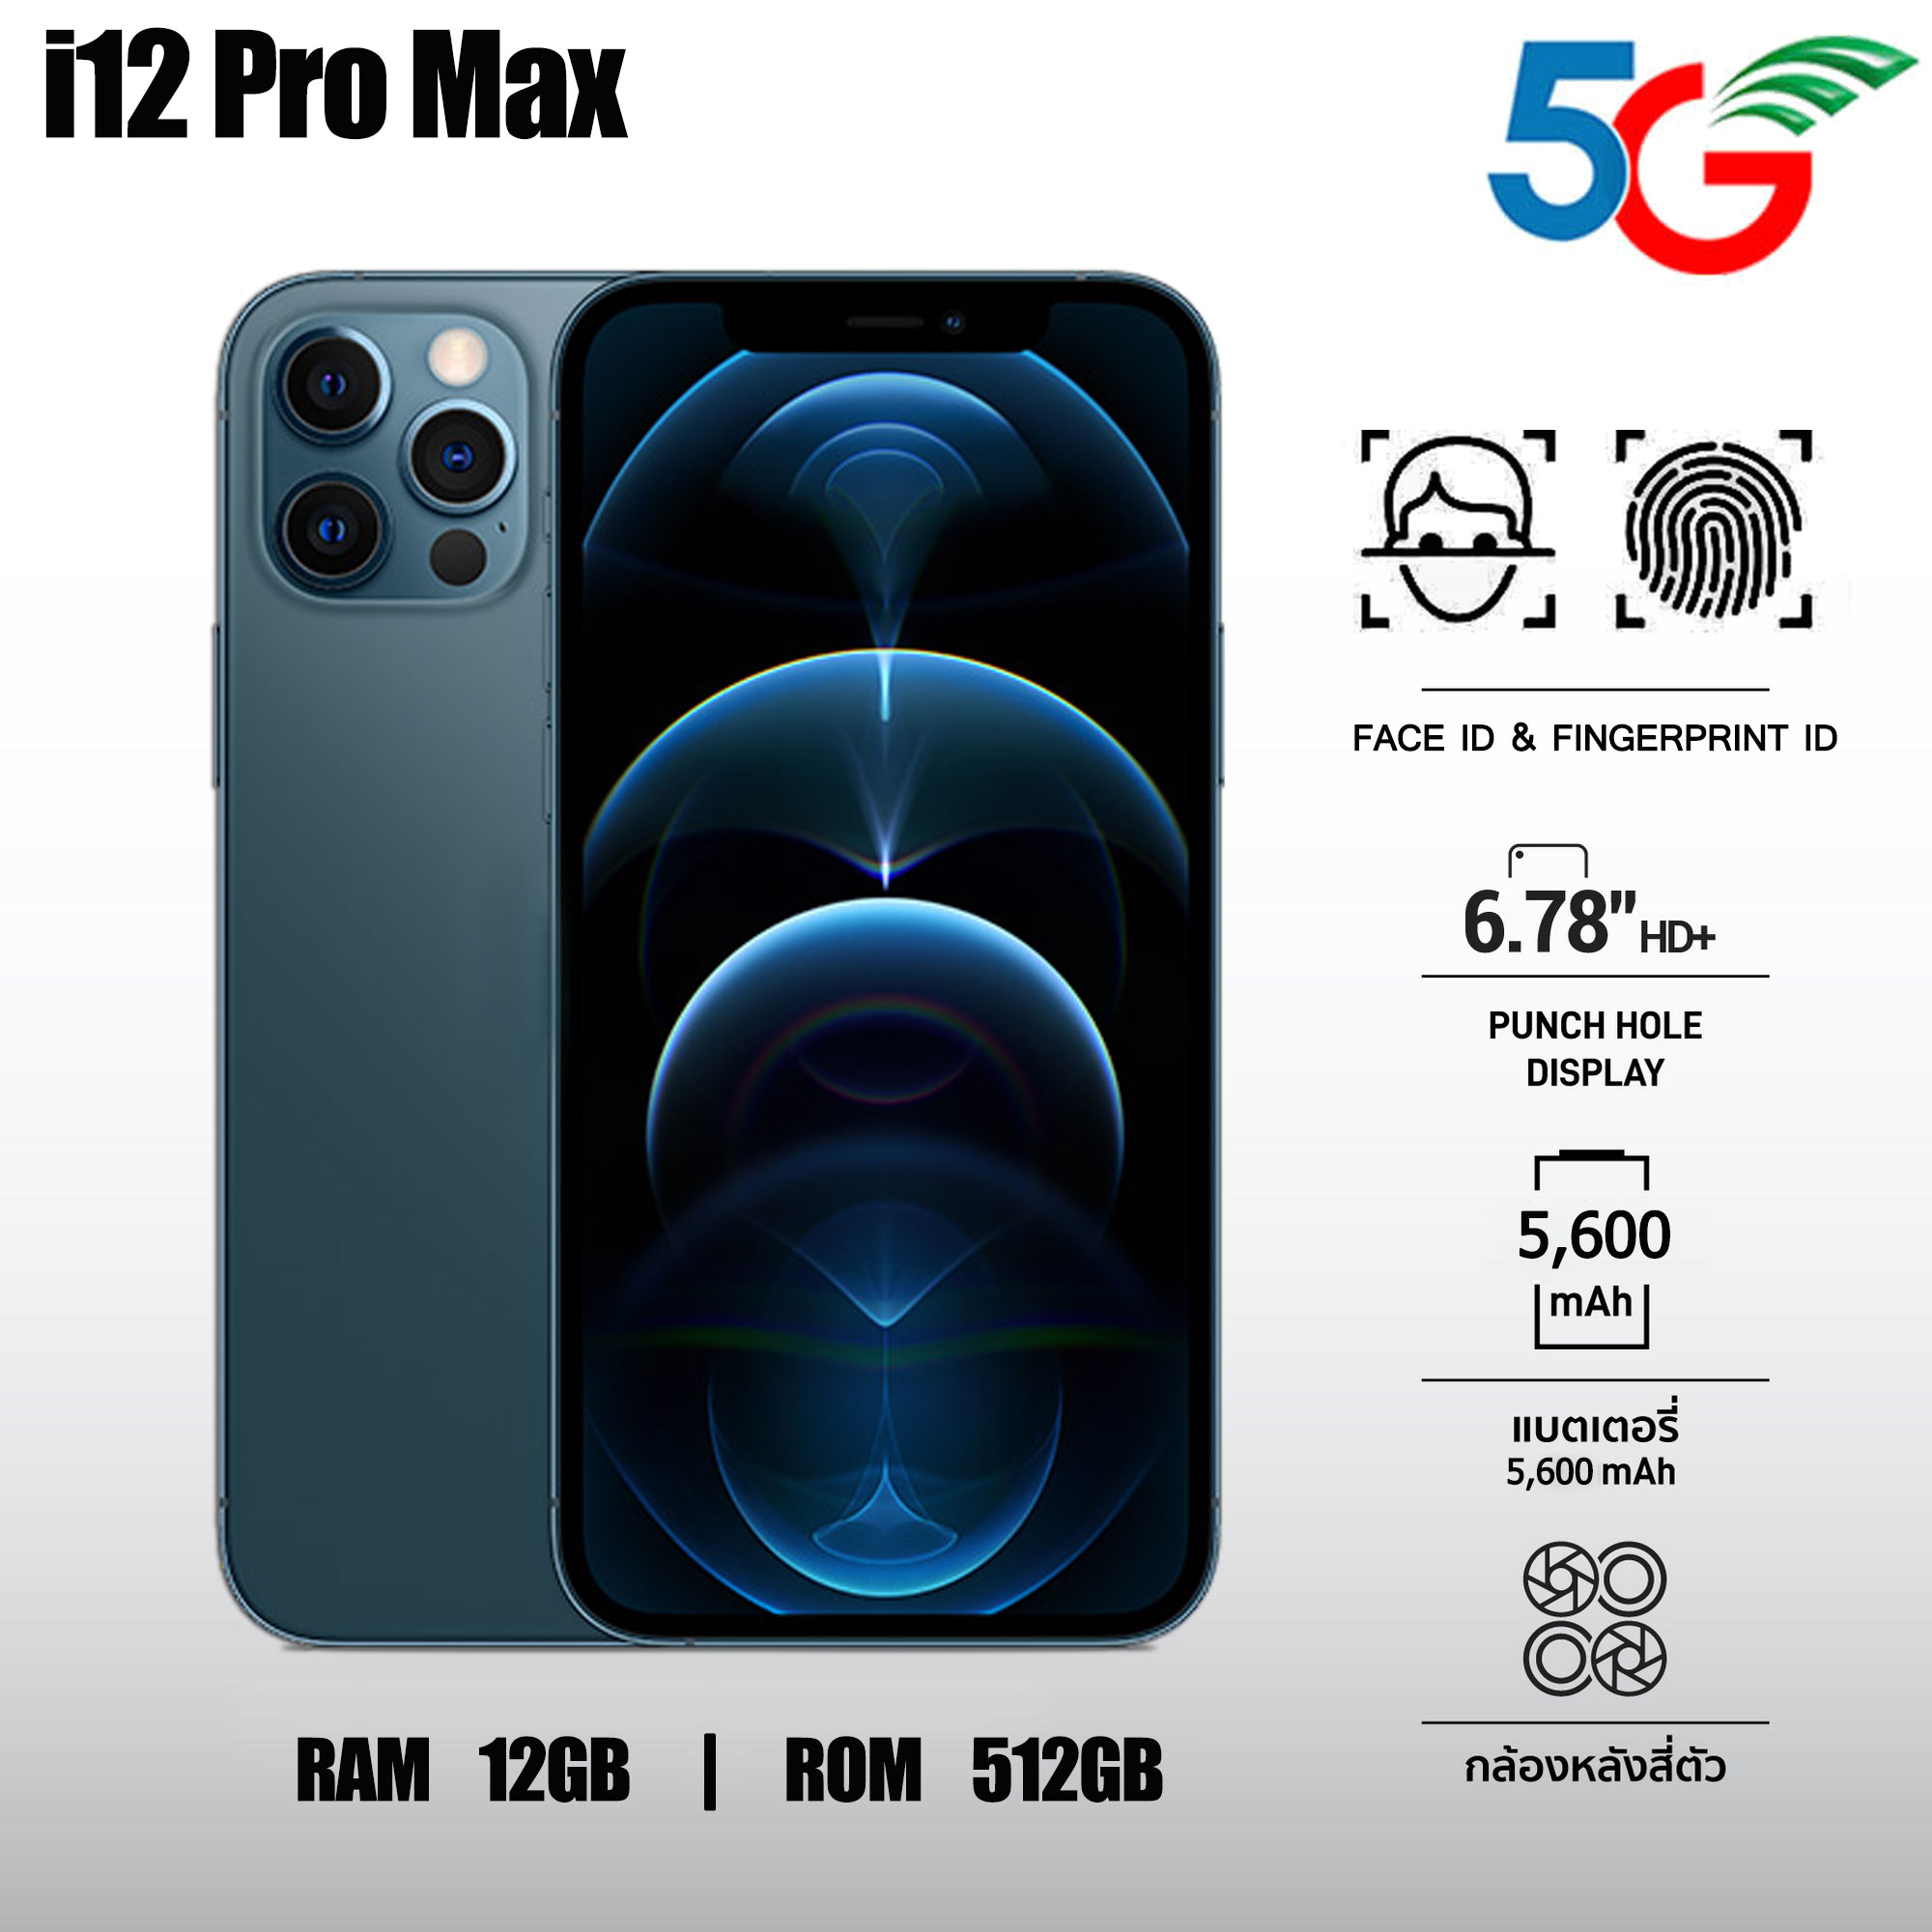 2021 i12 Pro Max โทรศัพท์มือถือ (Ram 12GB + Rom 512GB)สัญญาณเน็ต5G หน้าจอ 7.2"HD แบตฯอึด 3,999mAh กล้องหลัง4ตัว 48MP  สมาร์ทโฟน มือถือราคาถูก โทรศัพท์มือถือห โทรศัพท์ถูกๆ โทรศัพท์มือถือราคาถูก โทรศัพท์มือถือถูกๆ มือถือ โทรศัพท์ โทรสับ Mobile phone